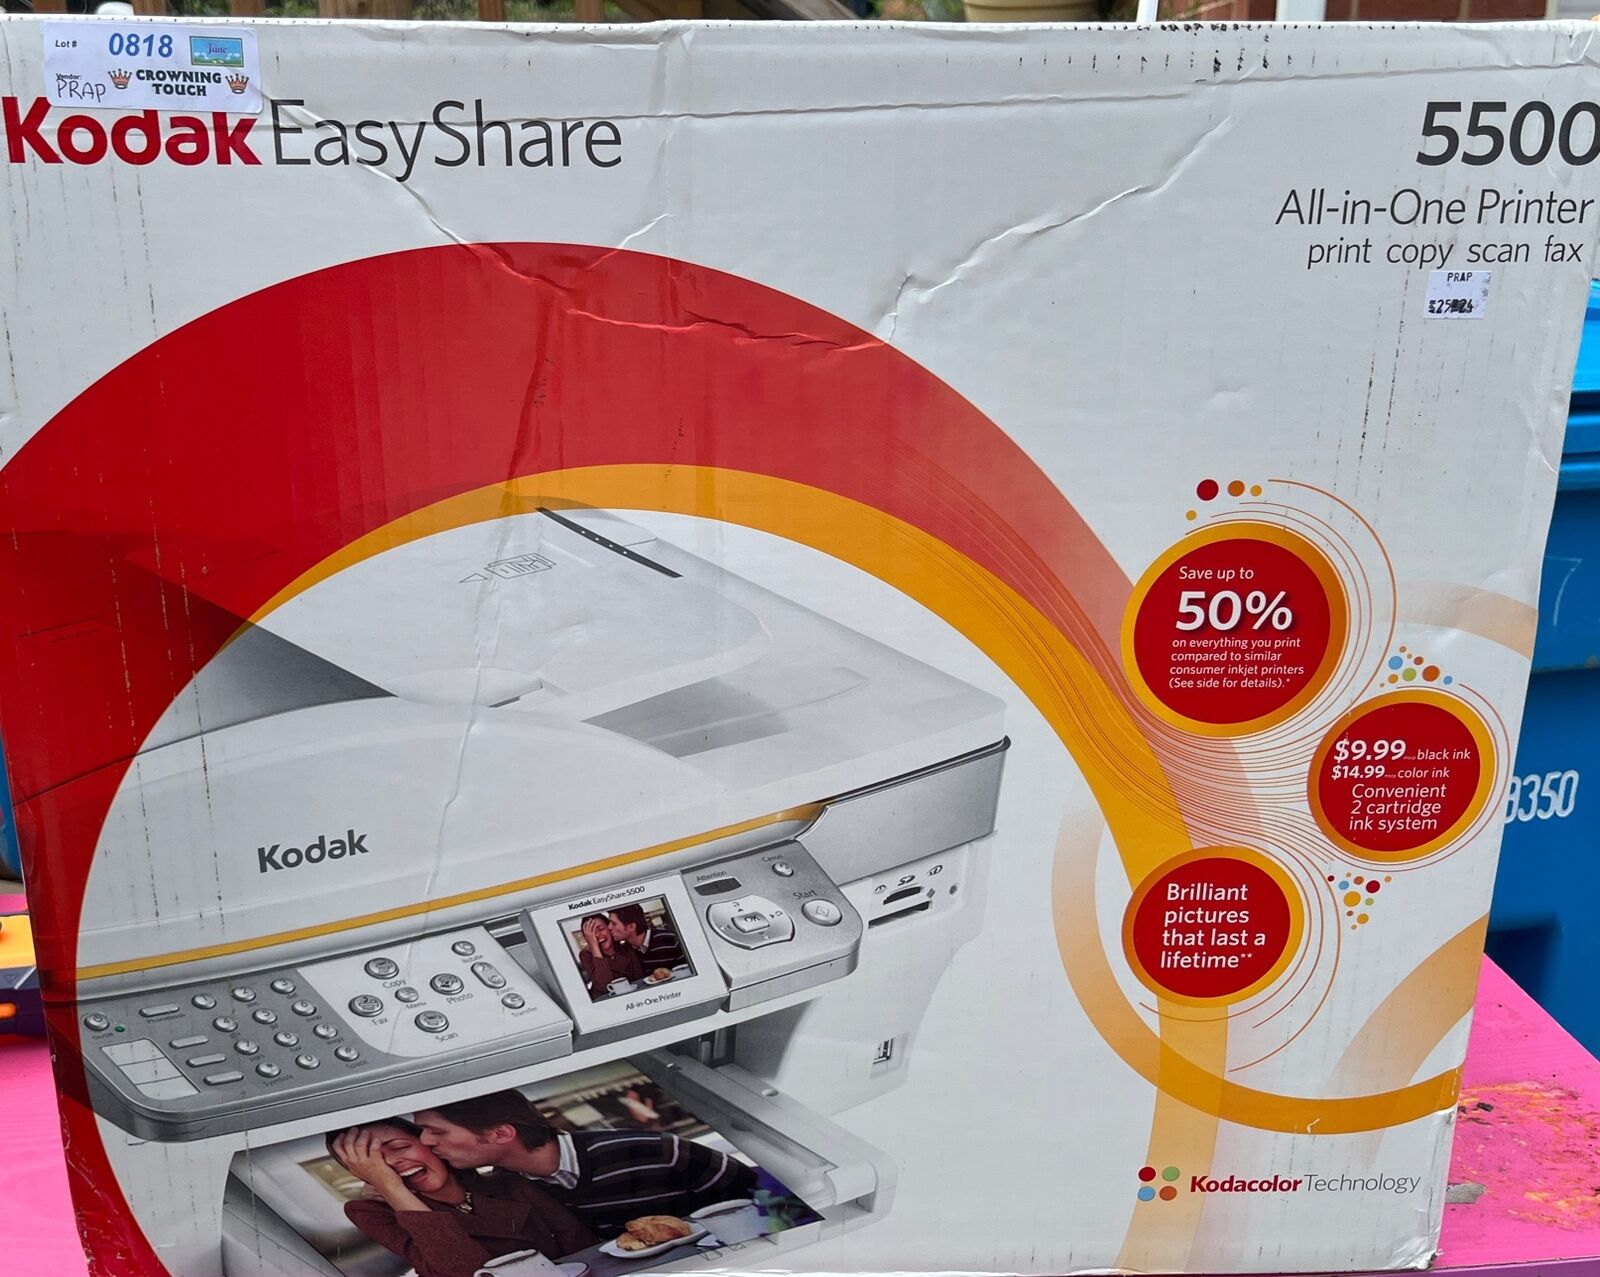 Kodak EasyShare 5500 All-in-One Printer Print, Copy, Scan, Fax New 